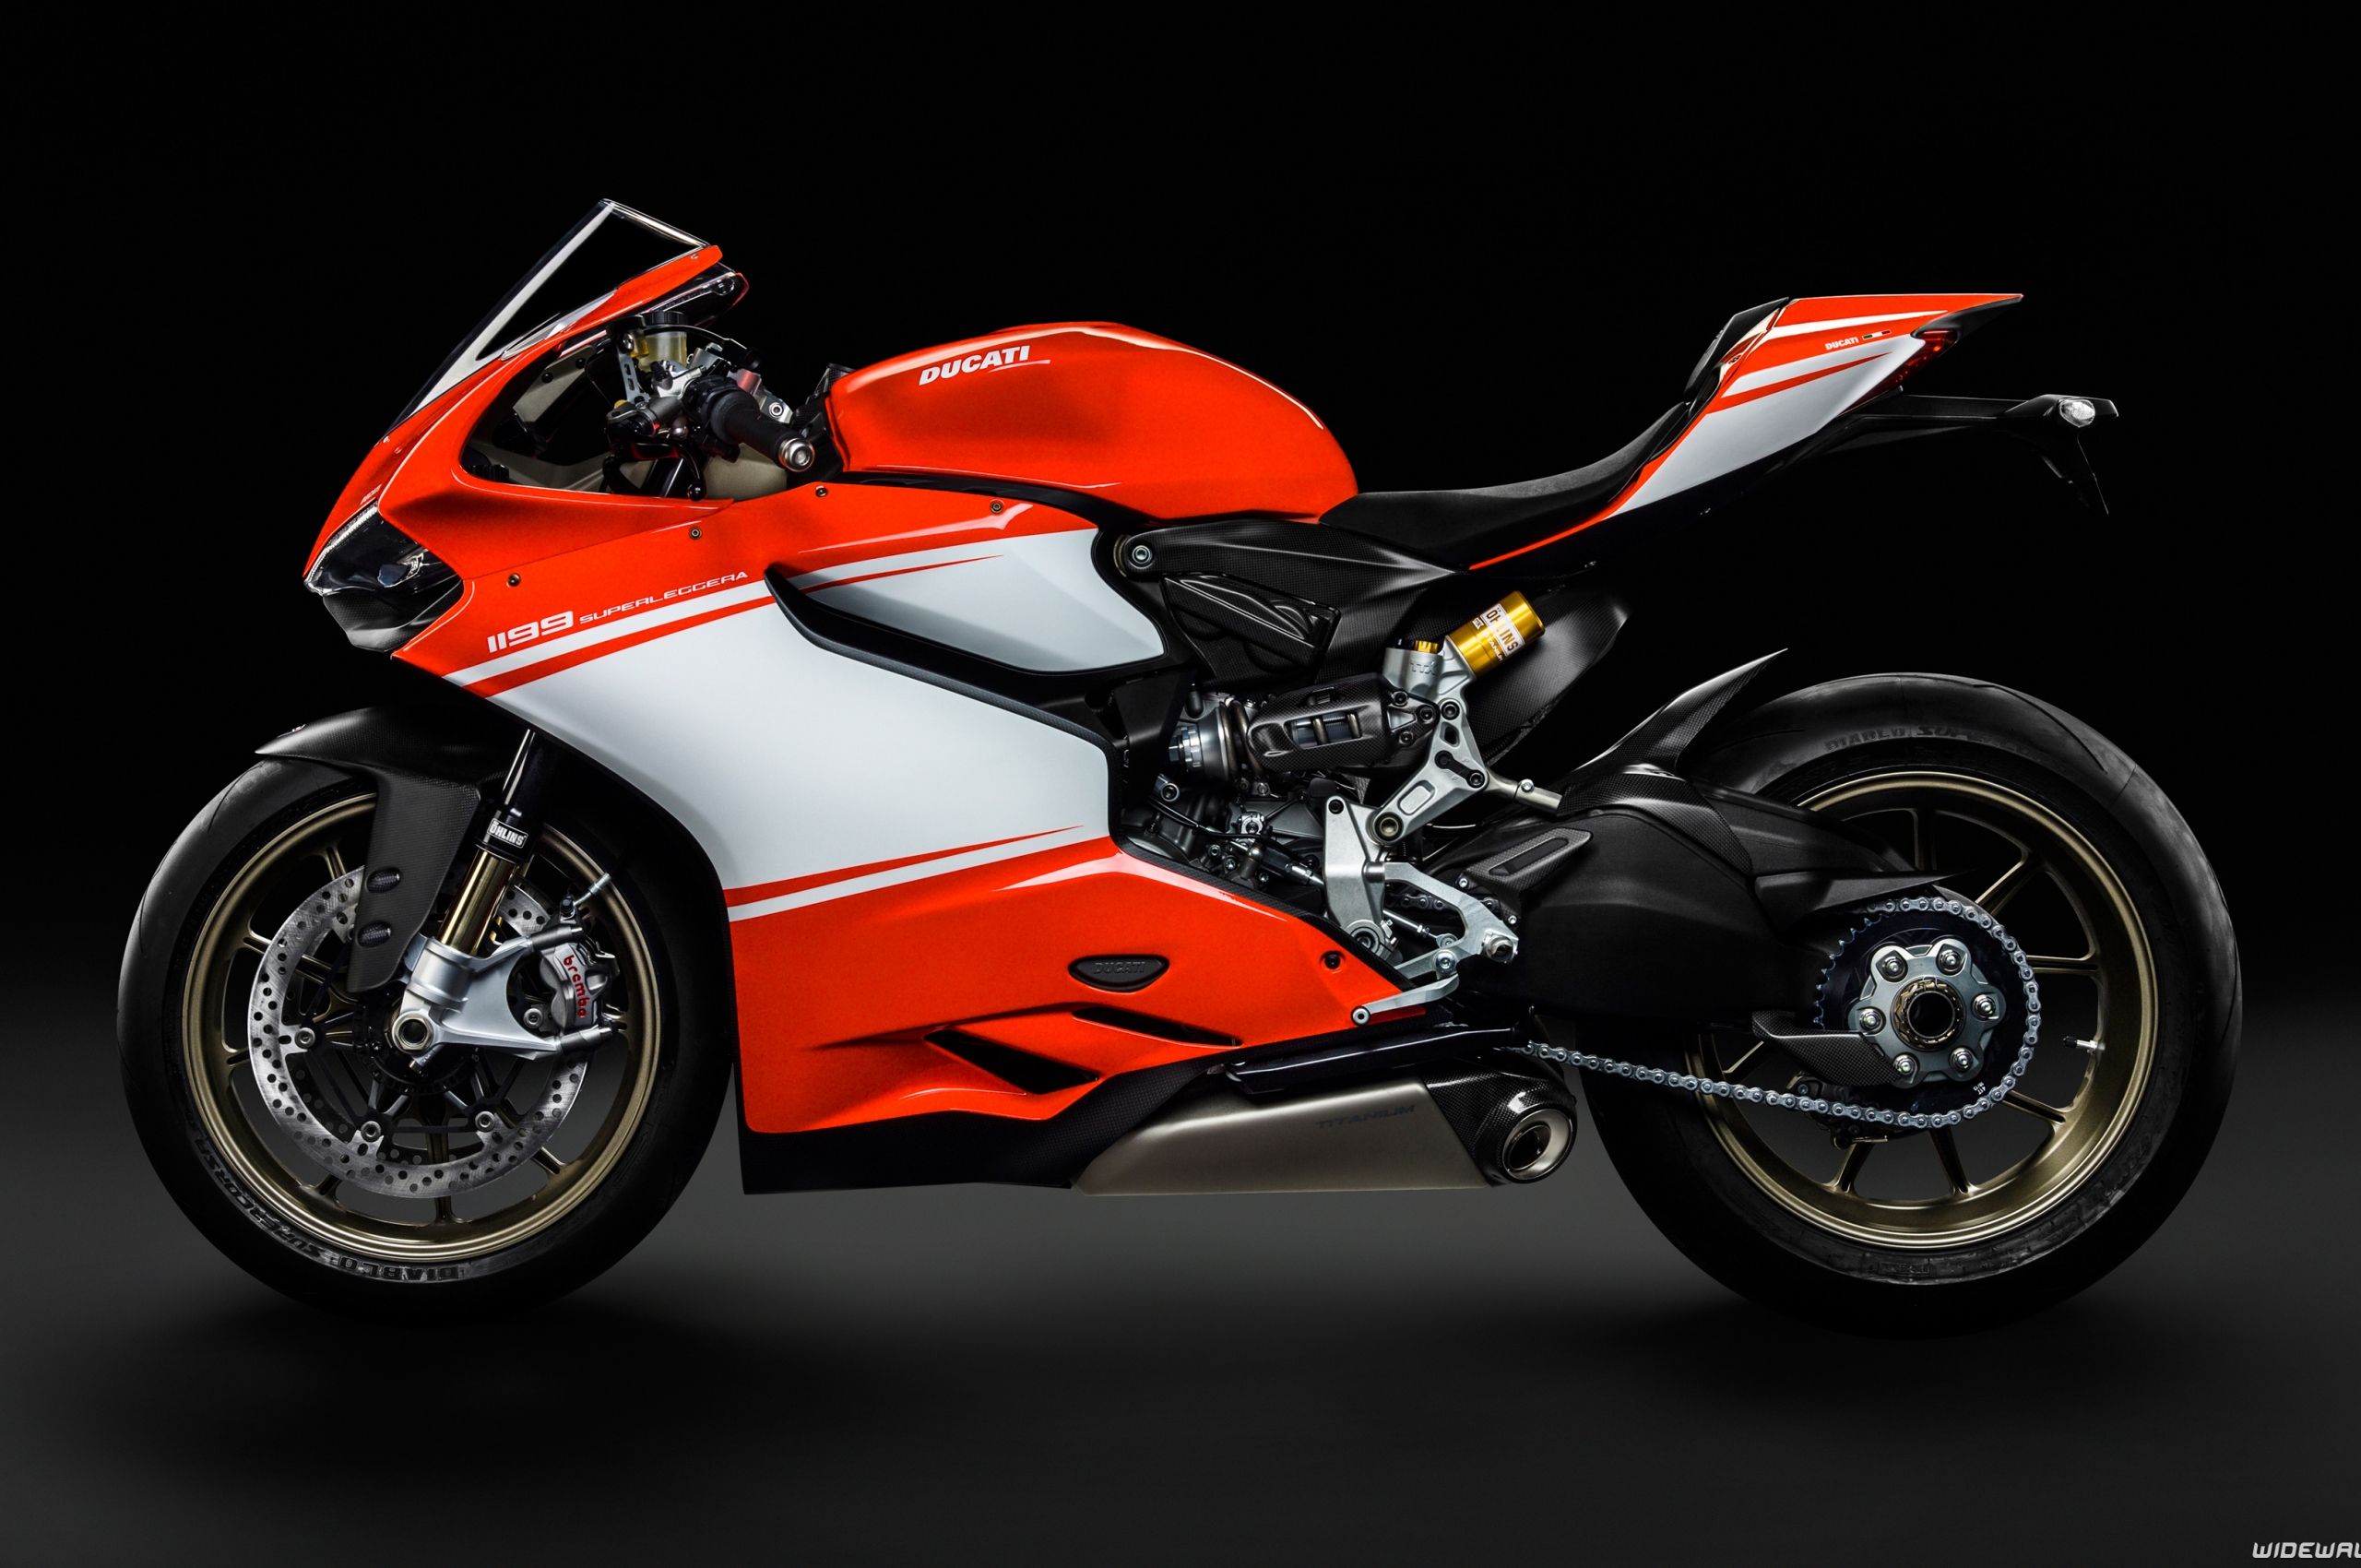 Free download Ducati 1199 Superleggera motorcycle desktop